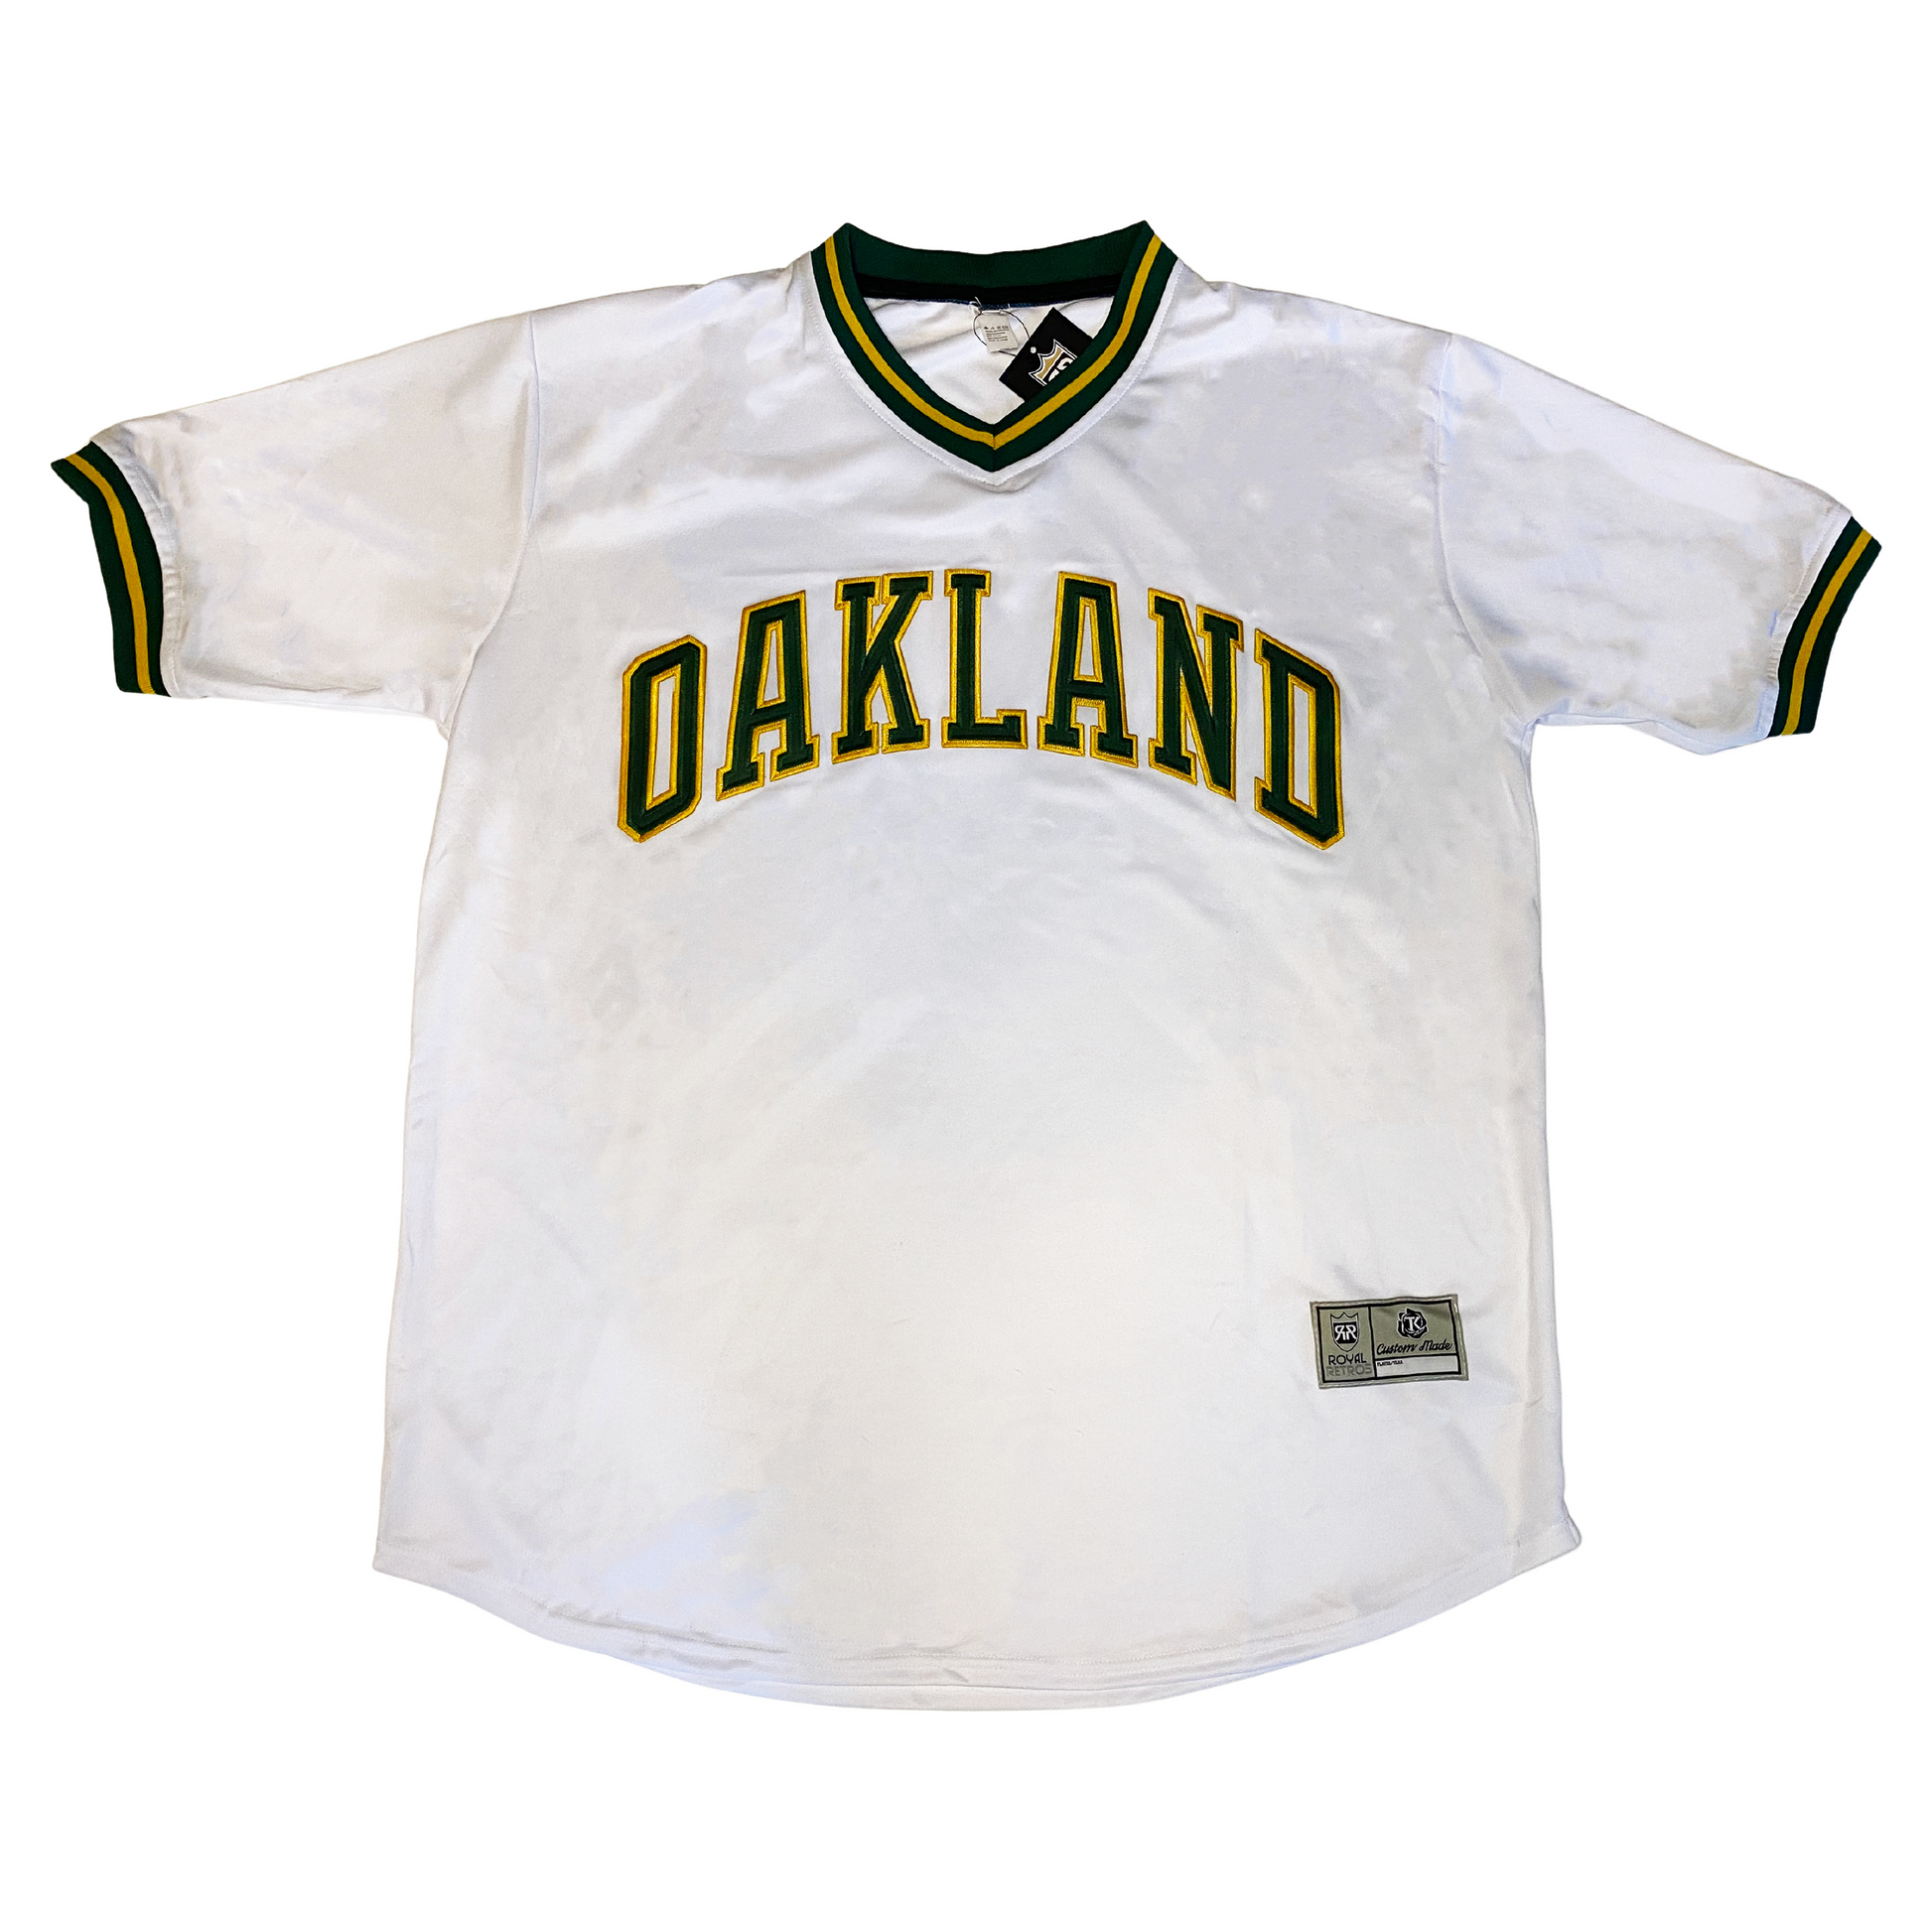 Oakland Baseball Jersey - Yellow - Medium - Royal Retros